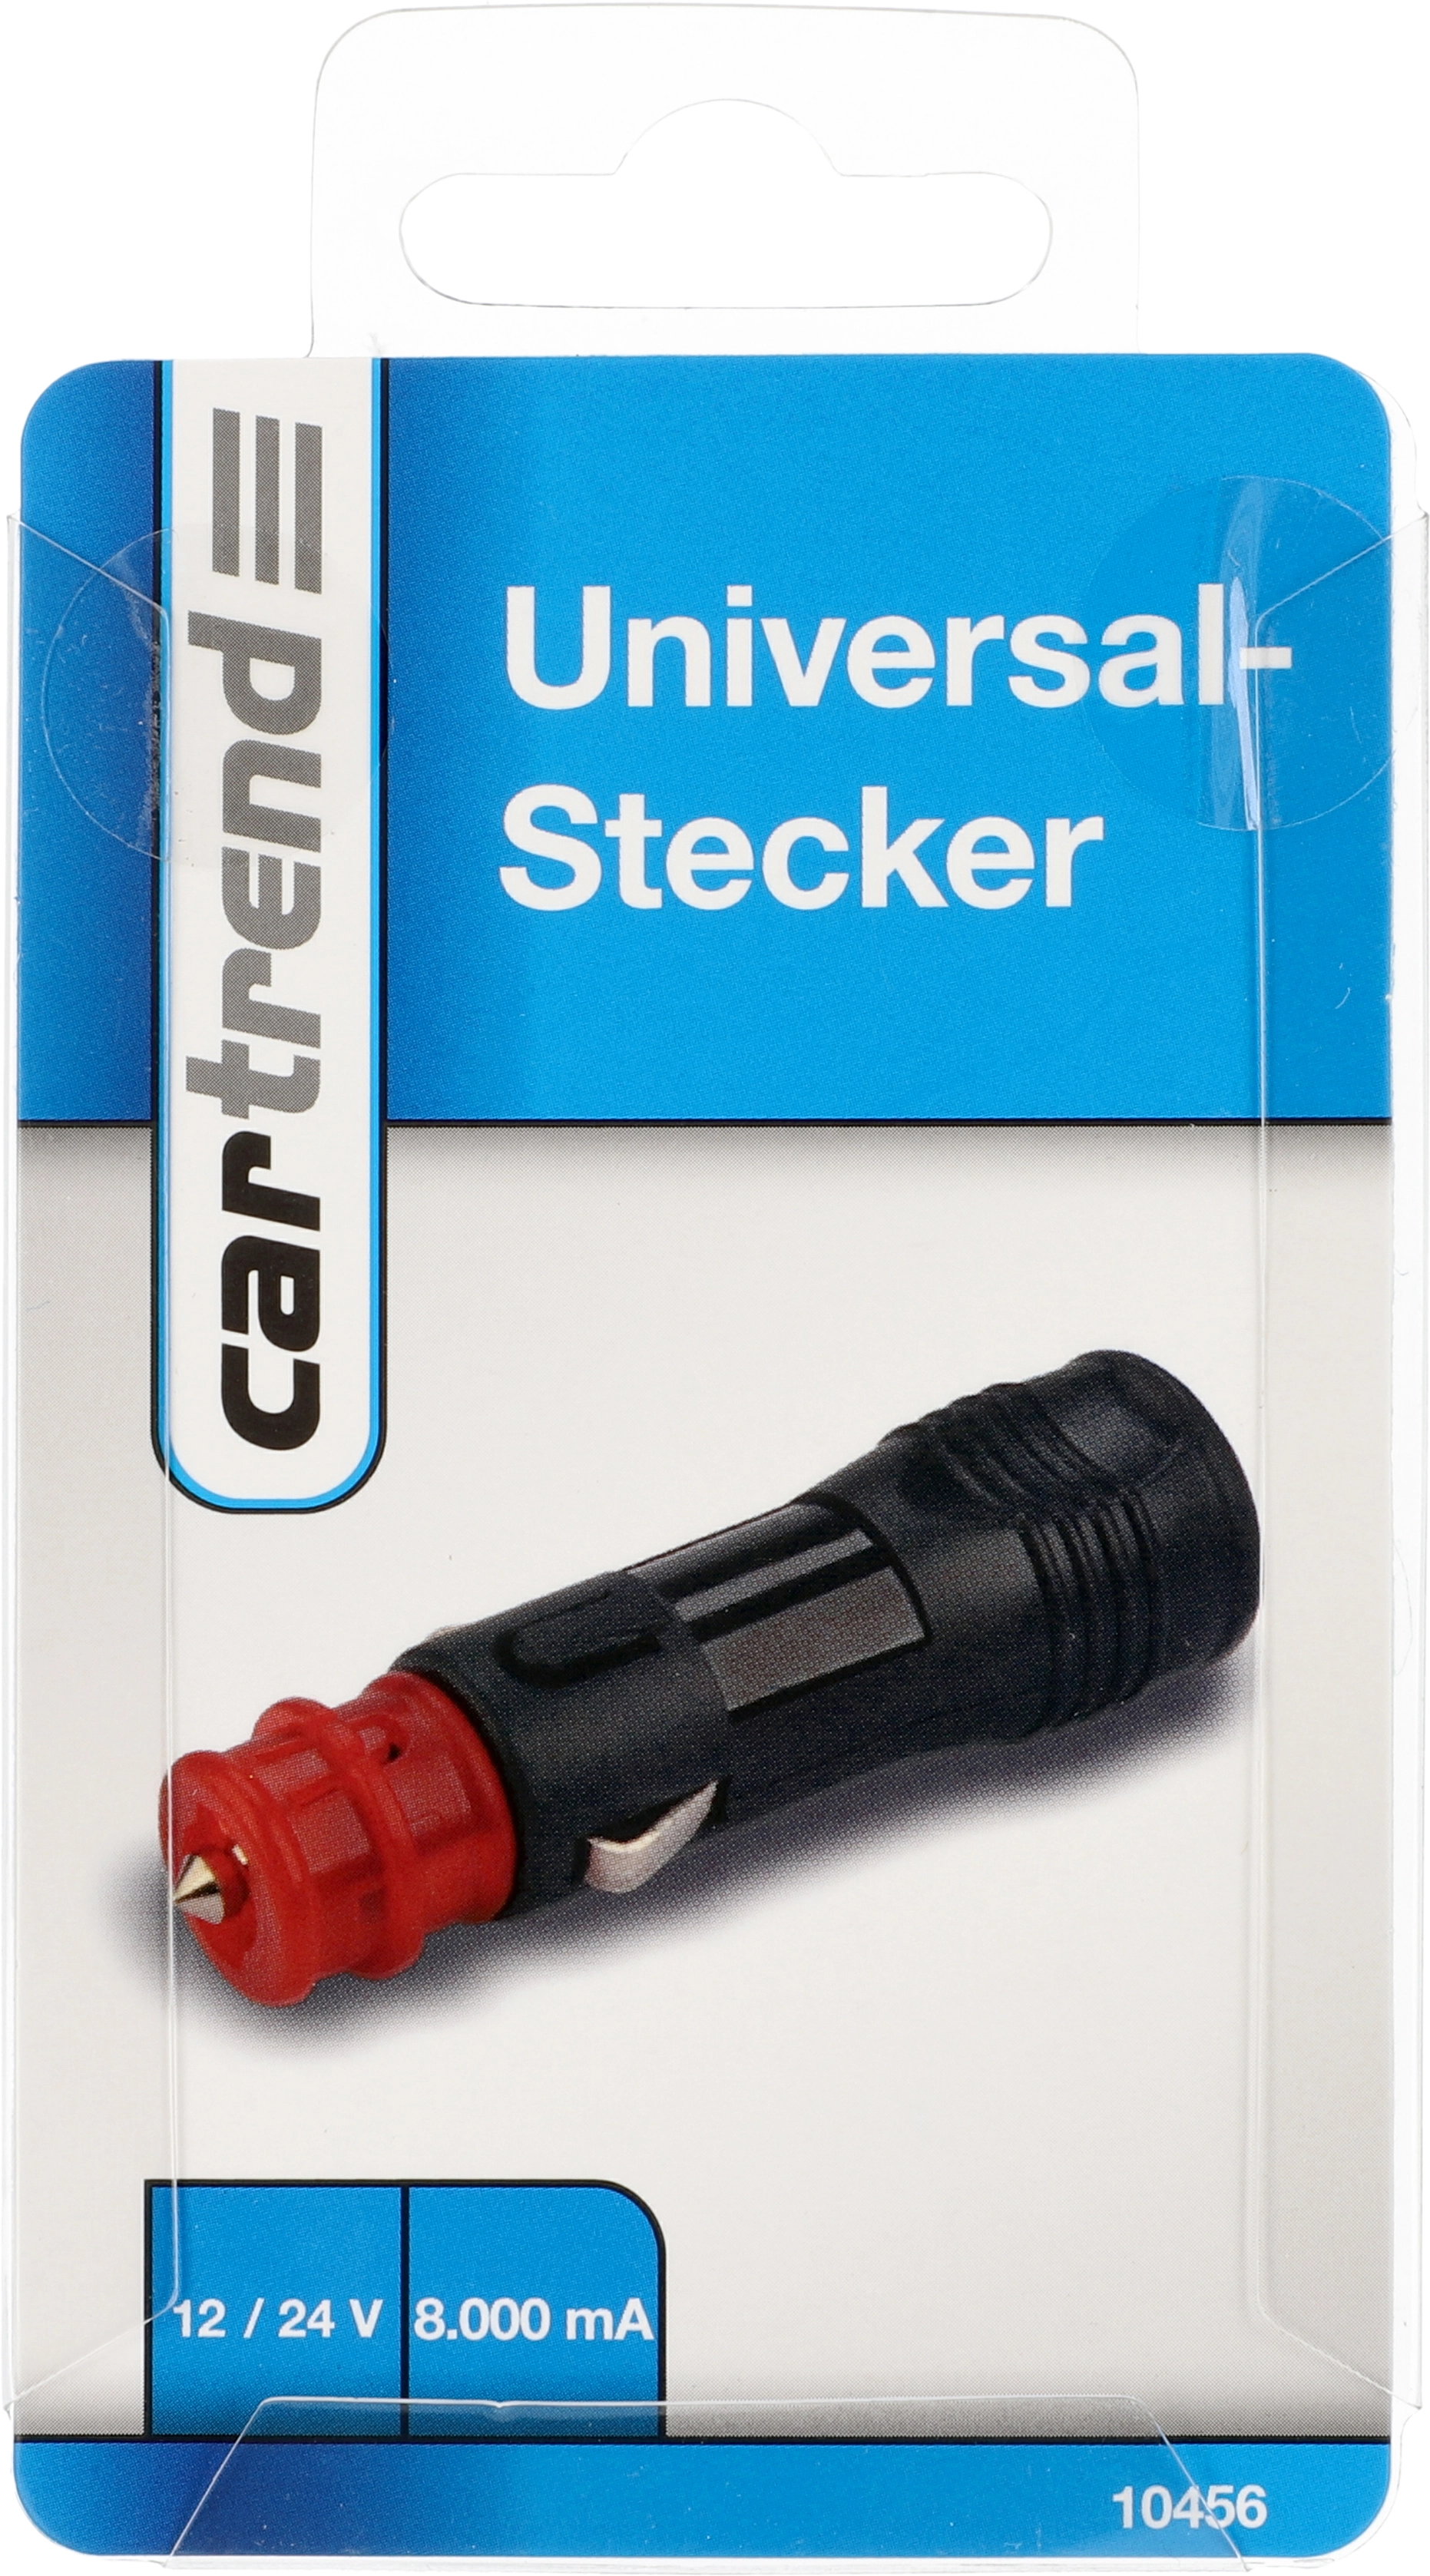 Cartrend Universal-Stecker 12 V/24 V kaufen bei OBI